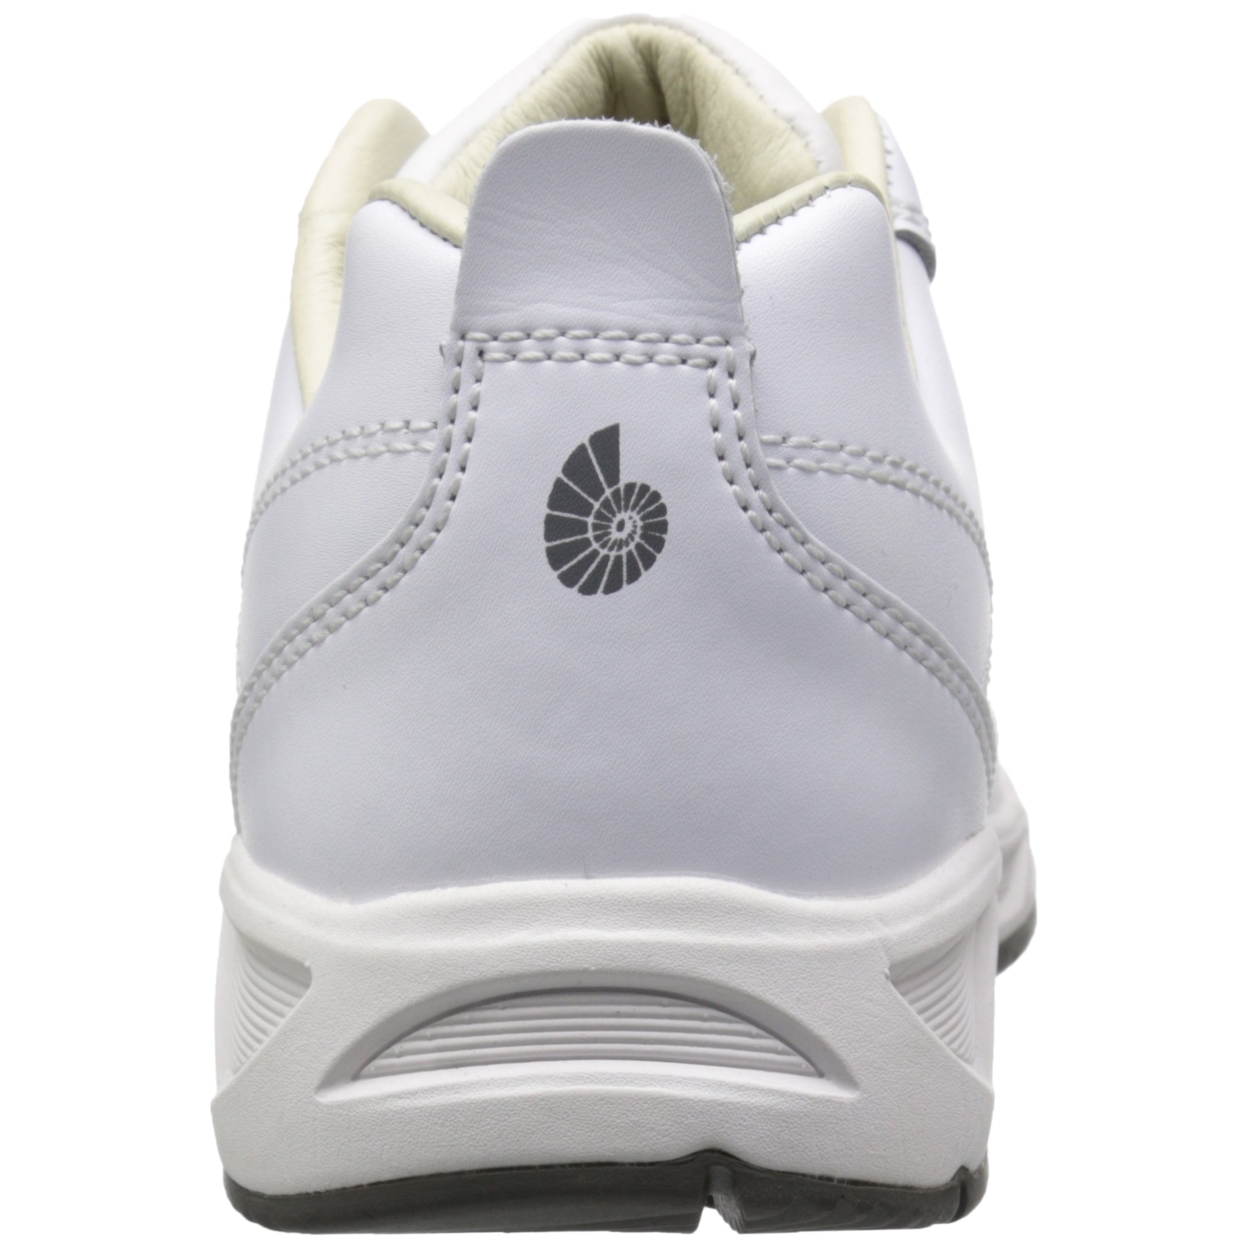 FSI FOOTWEAR SPECIALTIES INTERNATIONAL NAUTILUS Nautilus 4046 ESD No Exposed Metal Soft Toe Clean Room Athletic Shoe WHITE - WHITE, 12 Wide